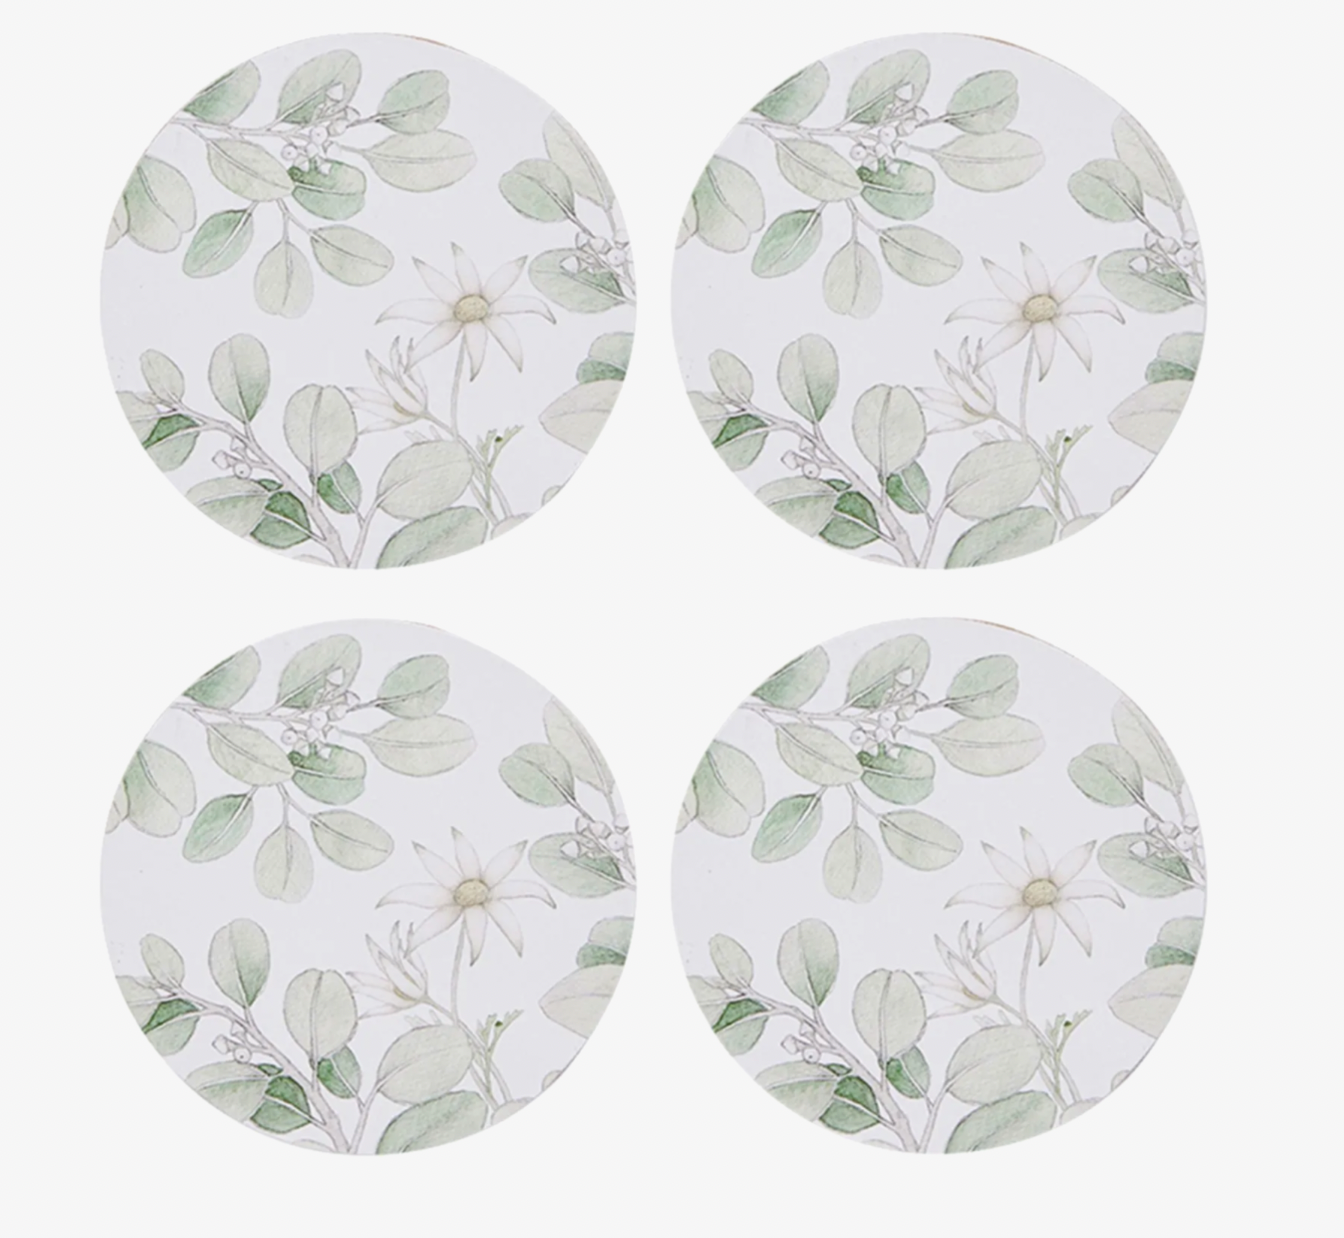 Flannel Flower Round Coasters - Set of 4